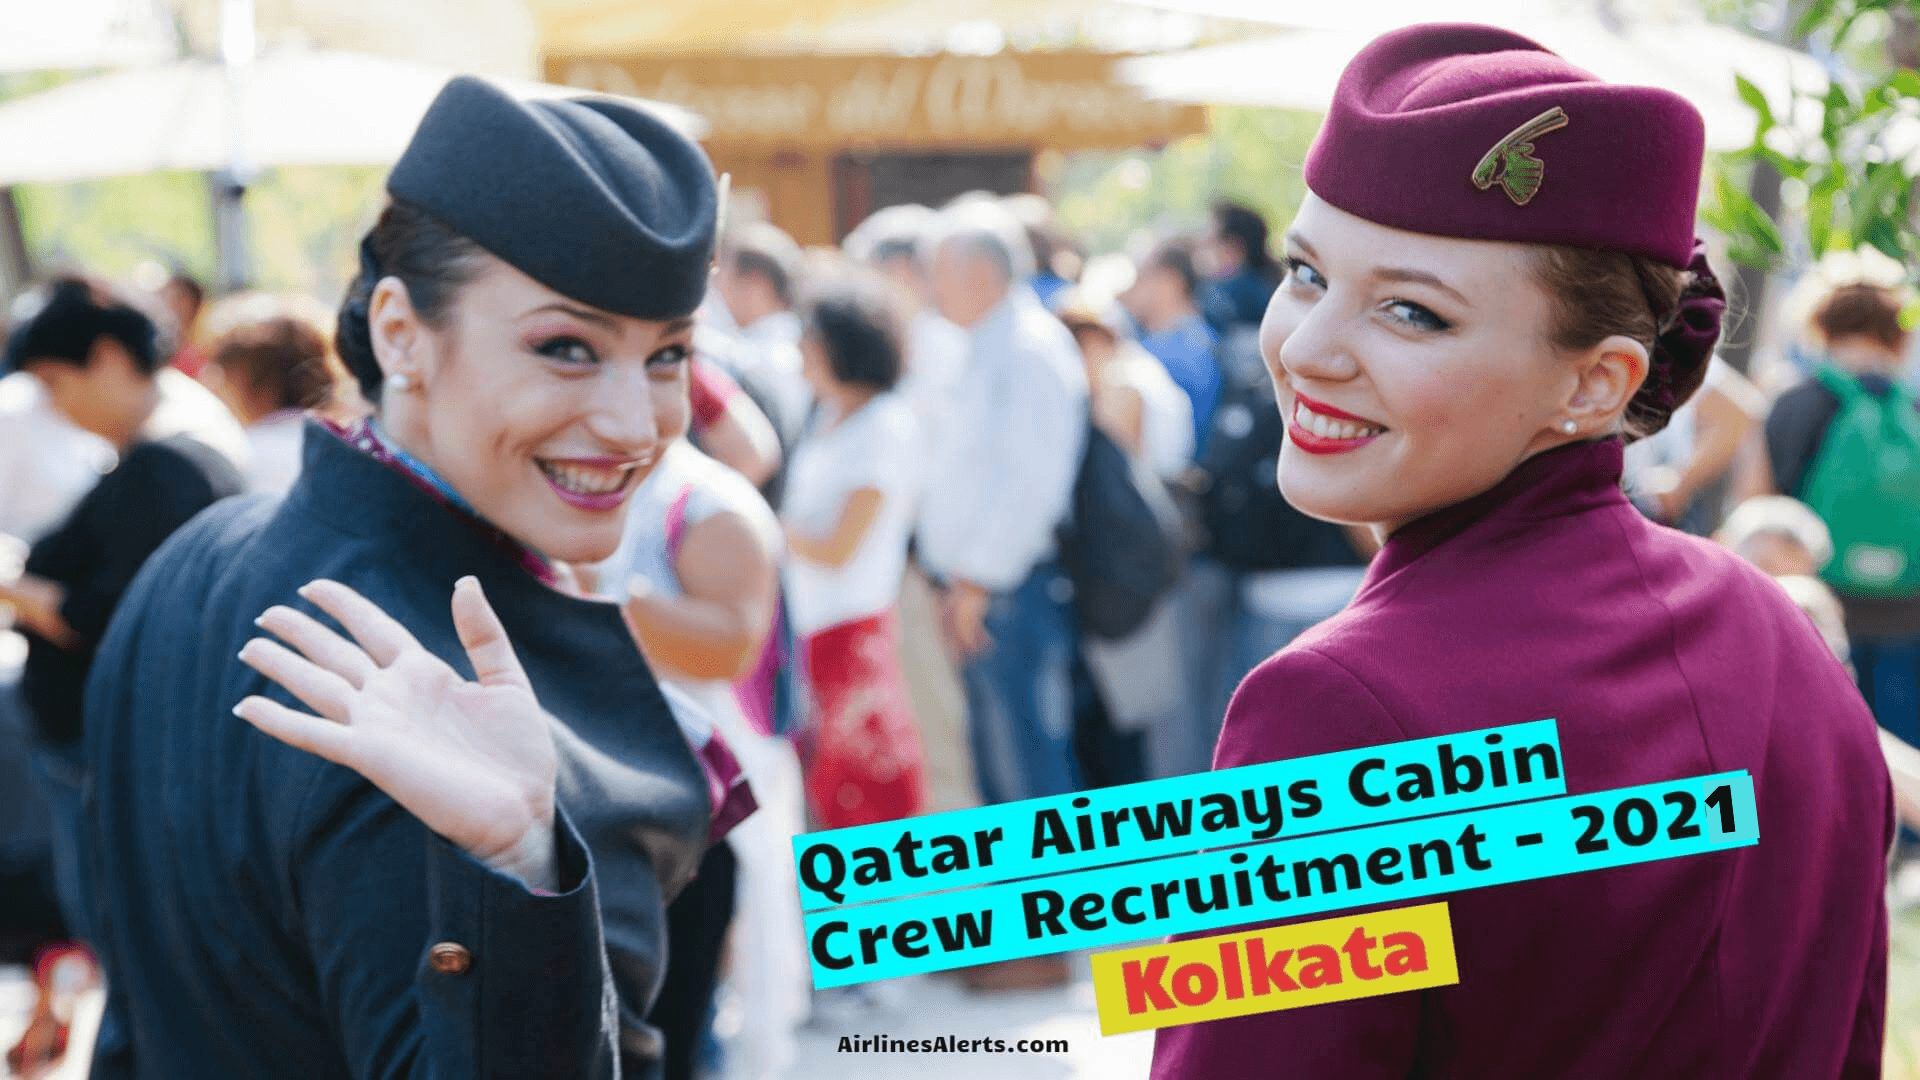 Qatar Airways Cabin Crew Recruitment 2021 Kolkata Check Eligibility & Apply Now 